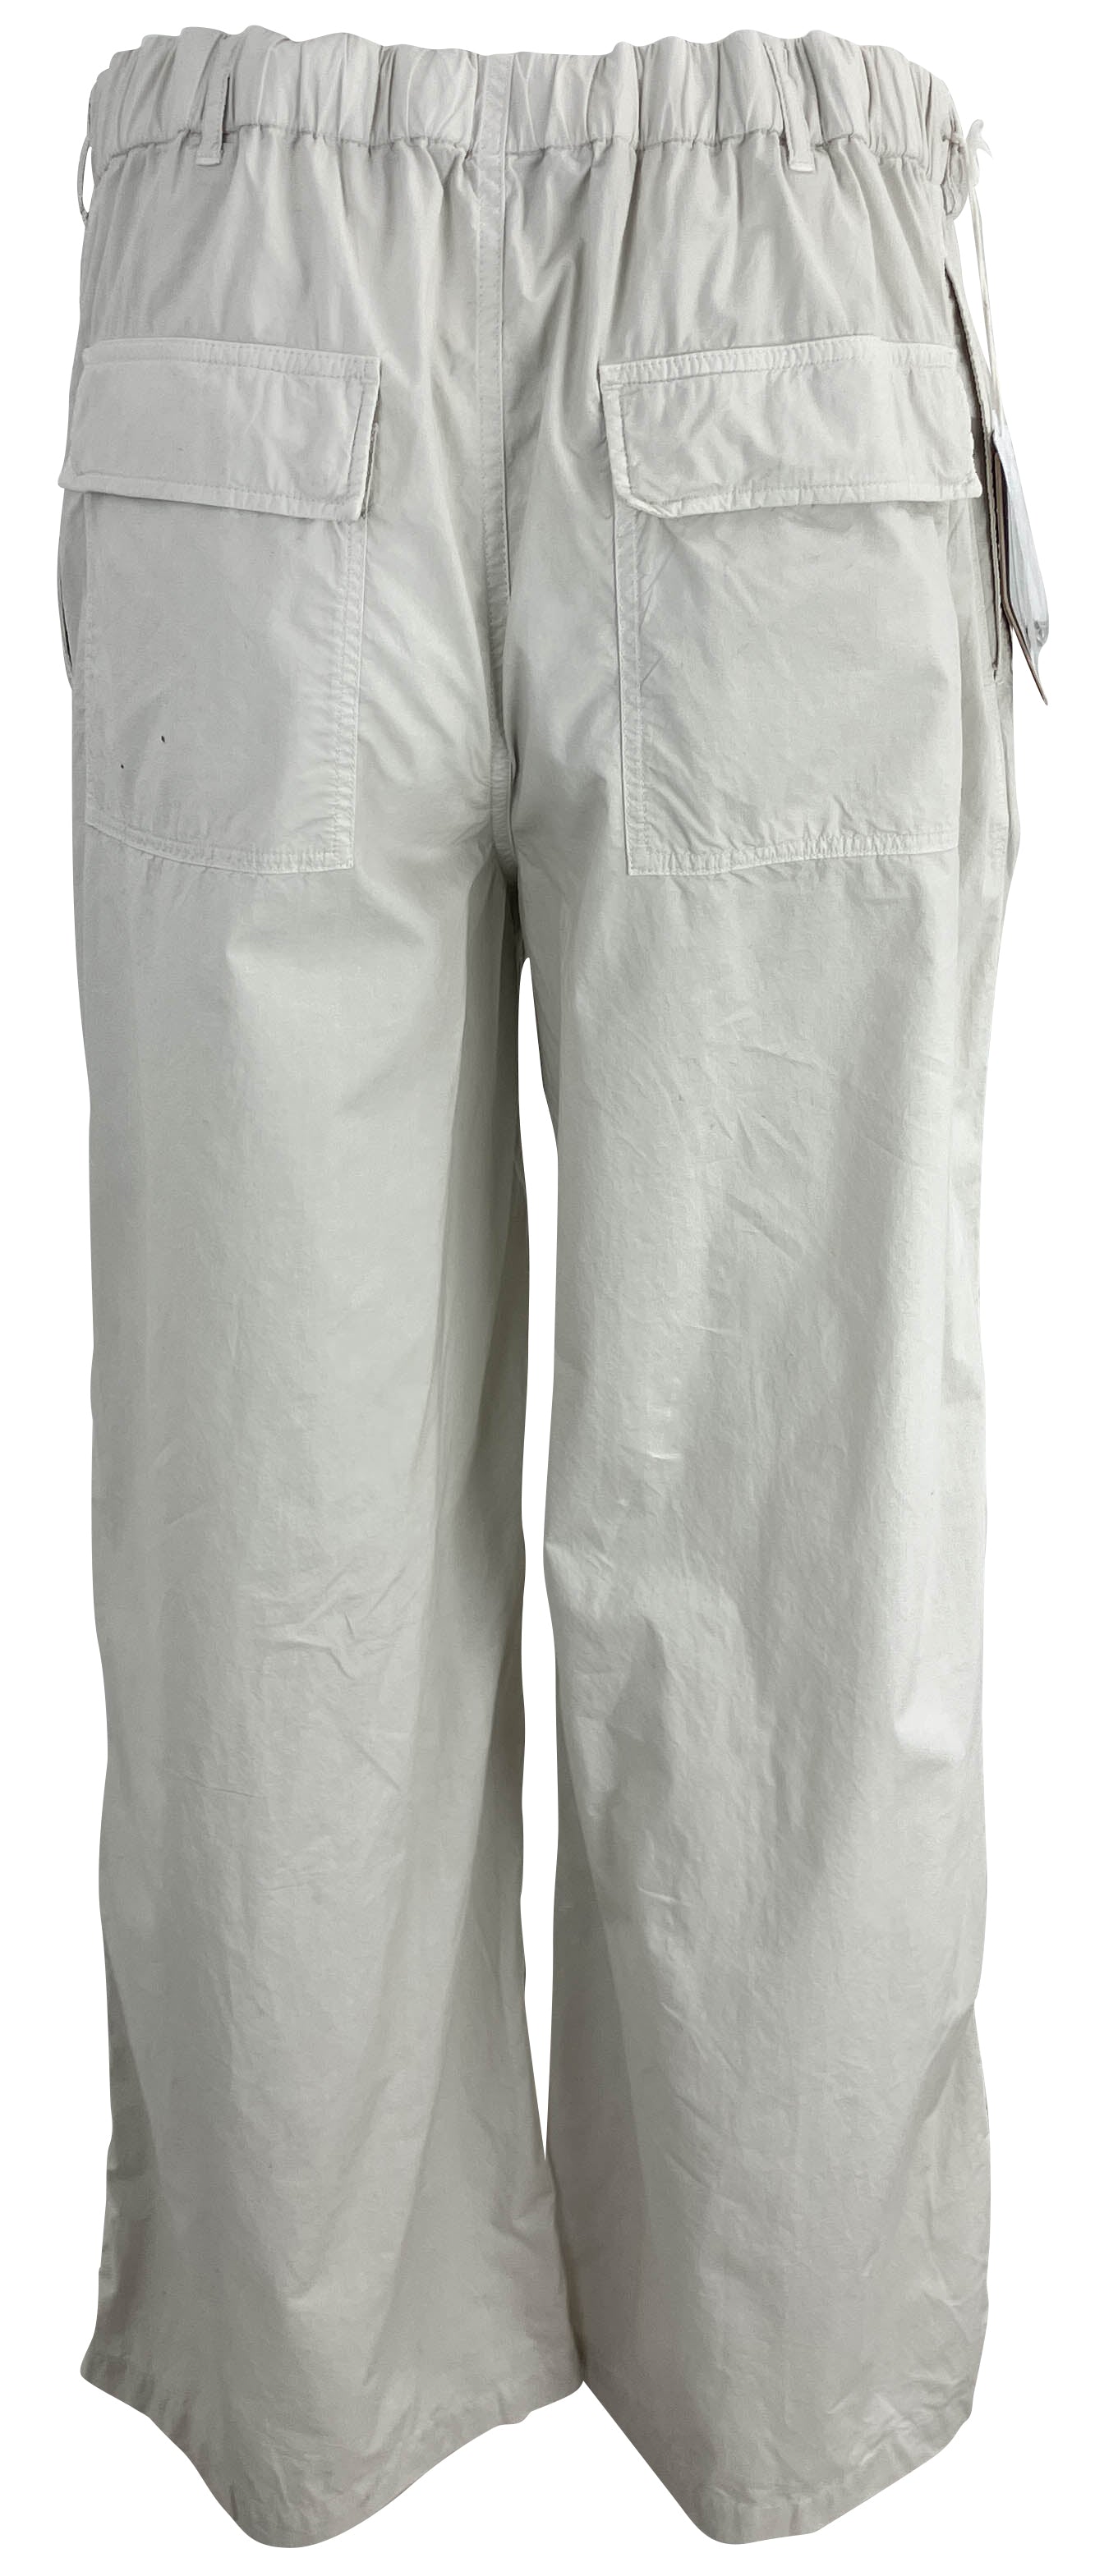 Aspesi Drawstring Pismo Pants in Cream - Discounts on Aspesi at UAL